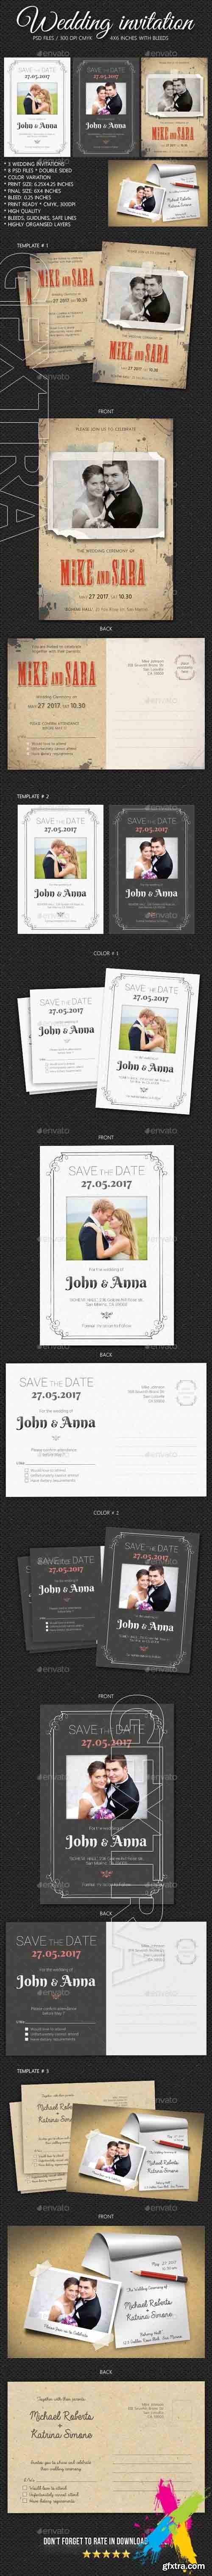 GraphicRiver - Wedding Invitation Bundle 2 20343788